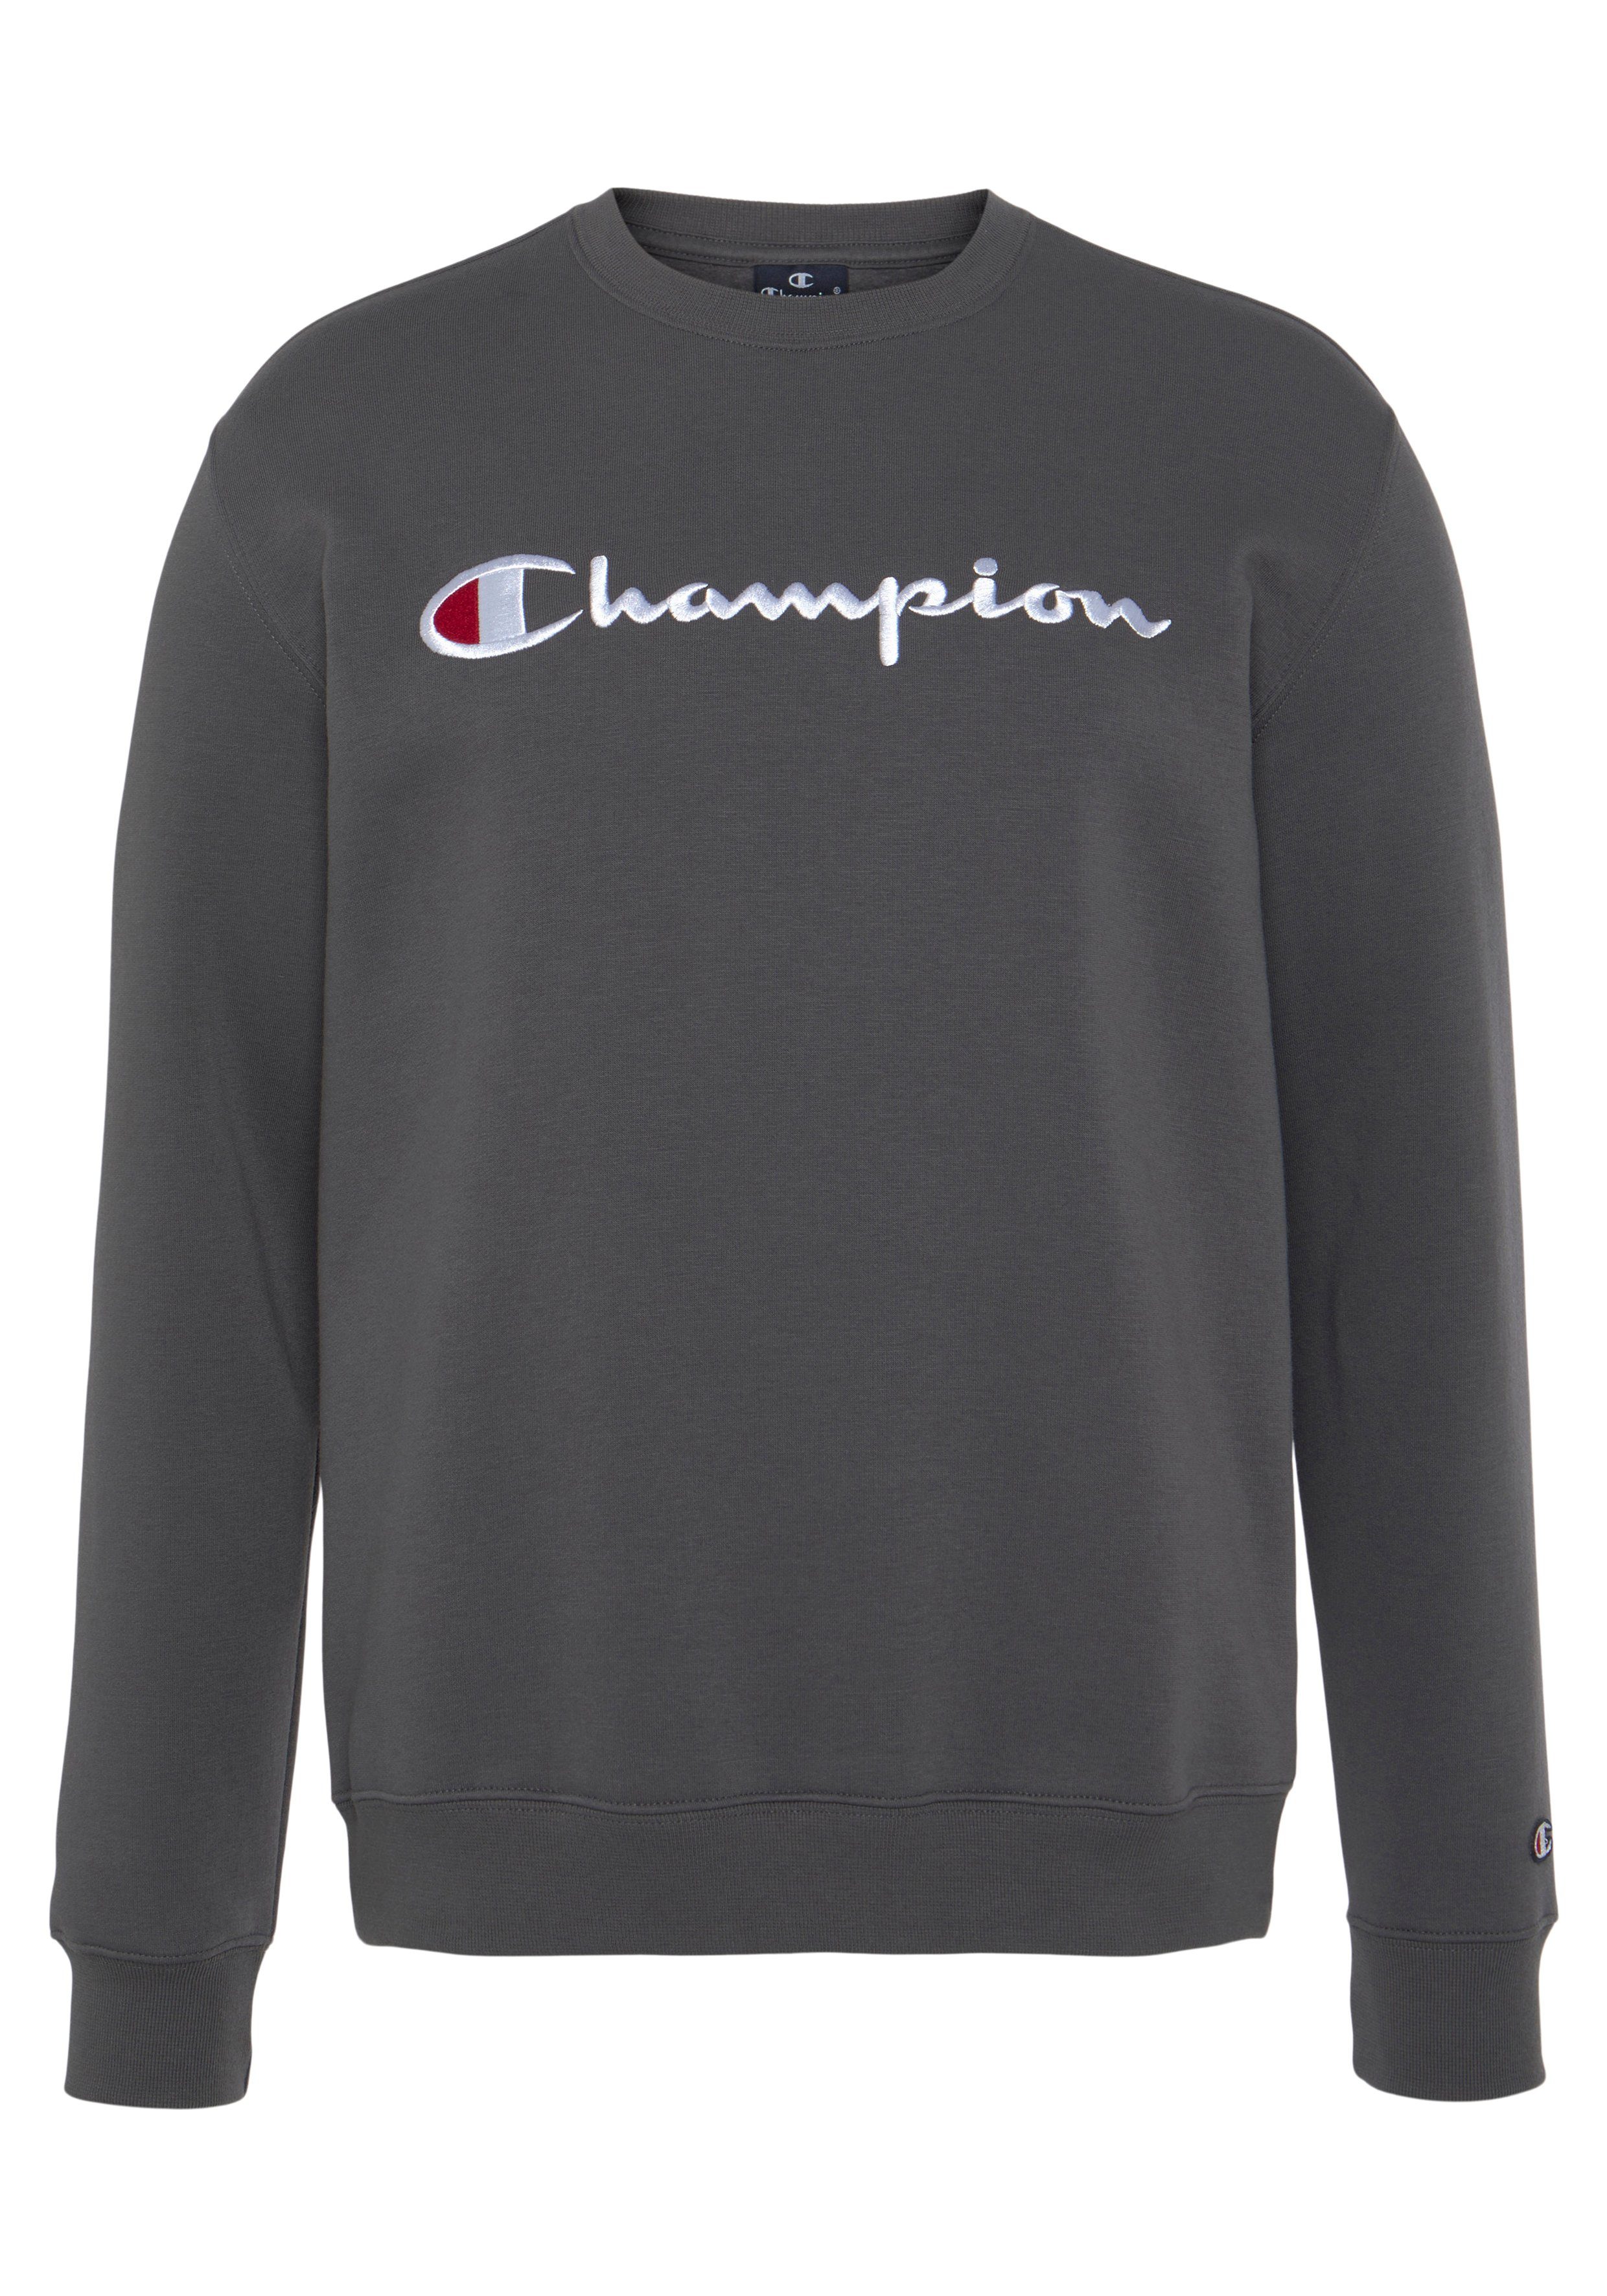 Champion l Sweatshirt grau large Classic Crewneck Sweatshirt